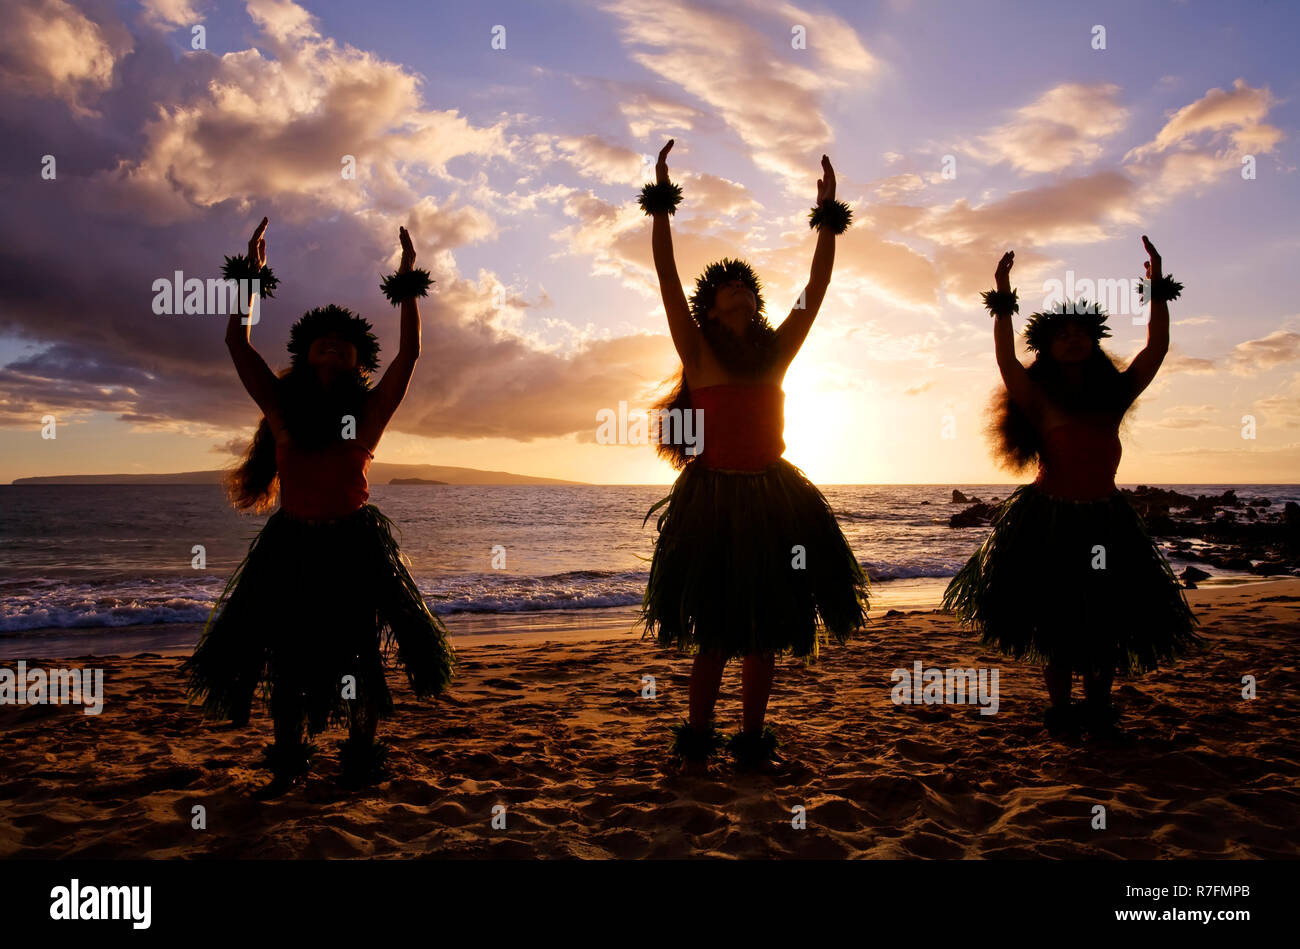 Three hula dancers on the beach at Palauea, Maui, Hawaii. Stock Photo